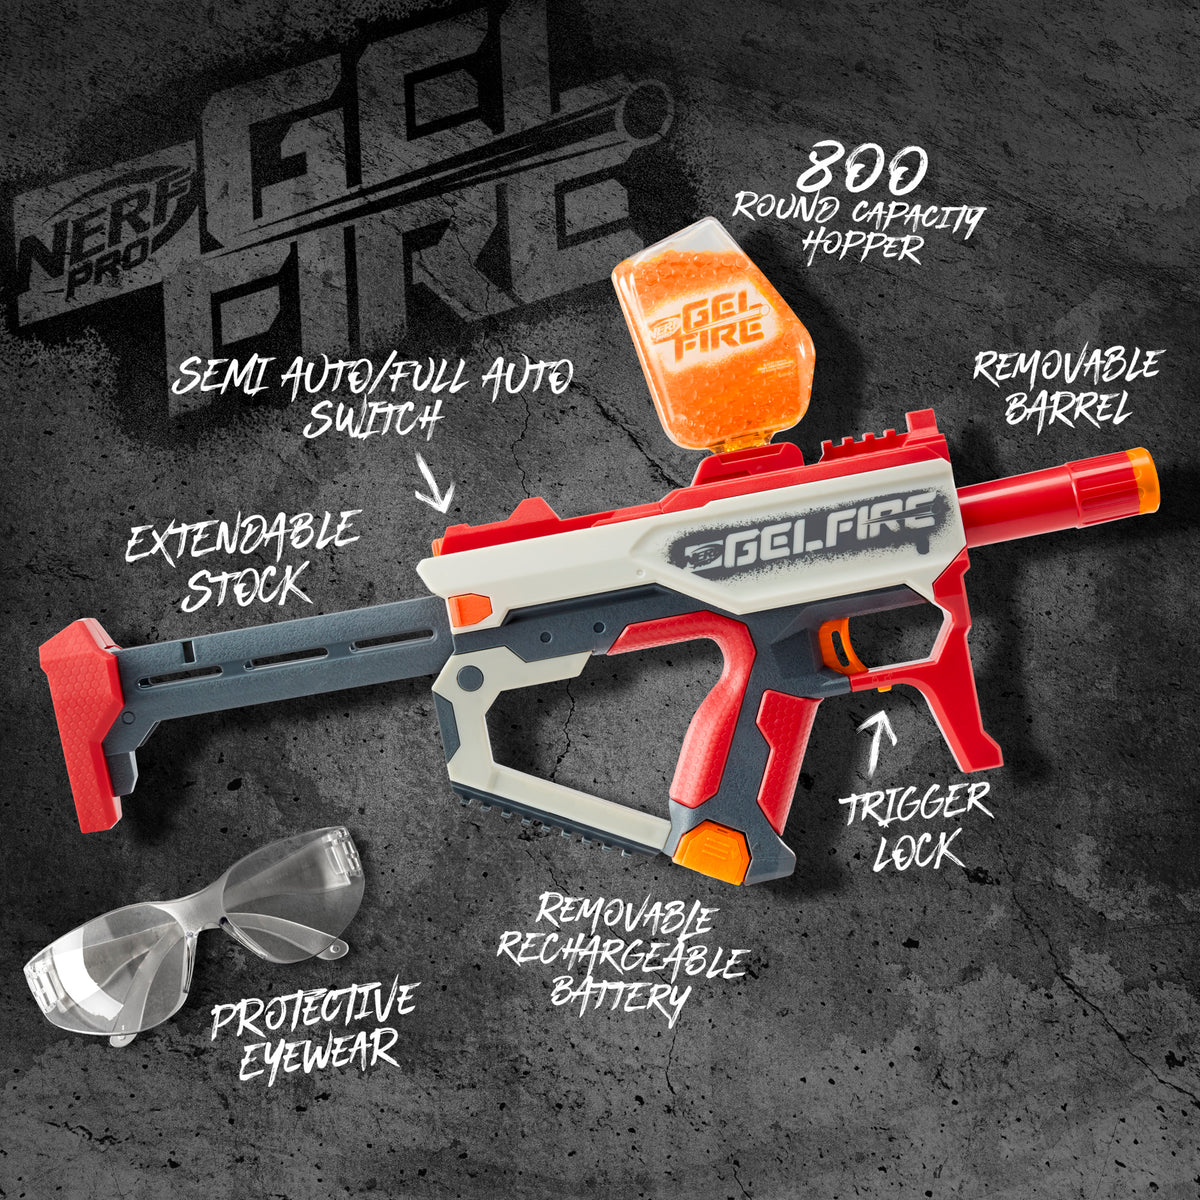 Nerf Pro Gelfire Raid Blaster – Hasbro Pulse